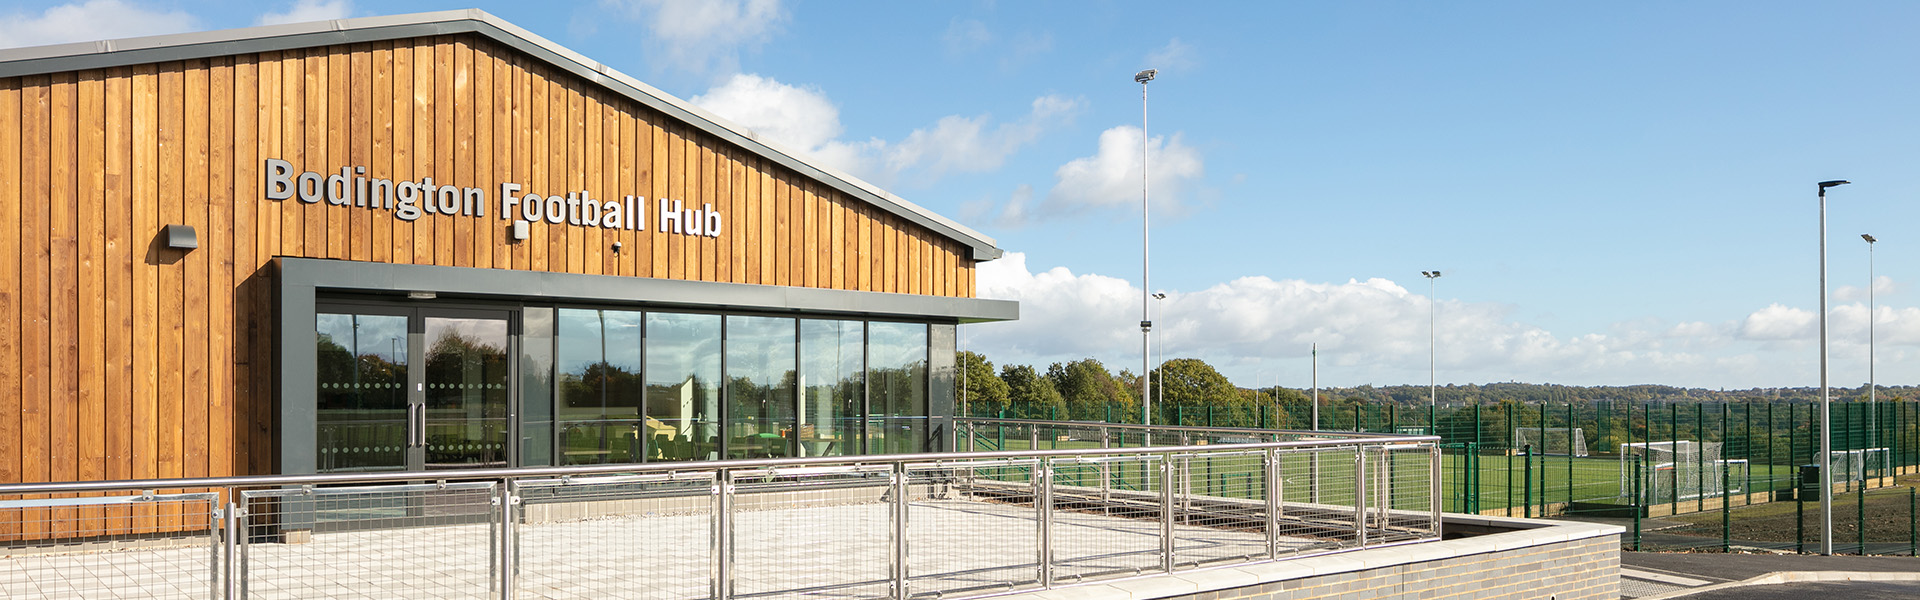 Bodington Football Hub exterior